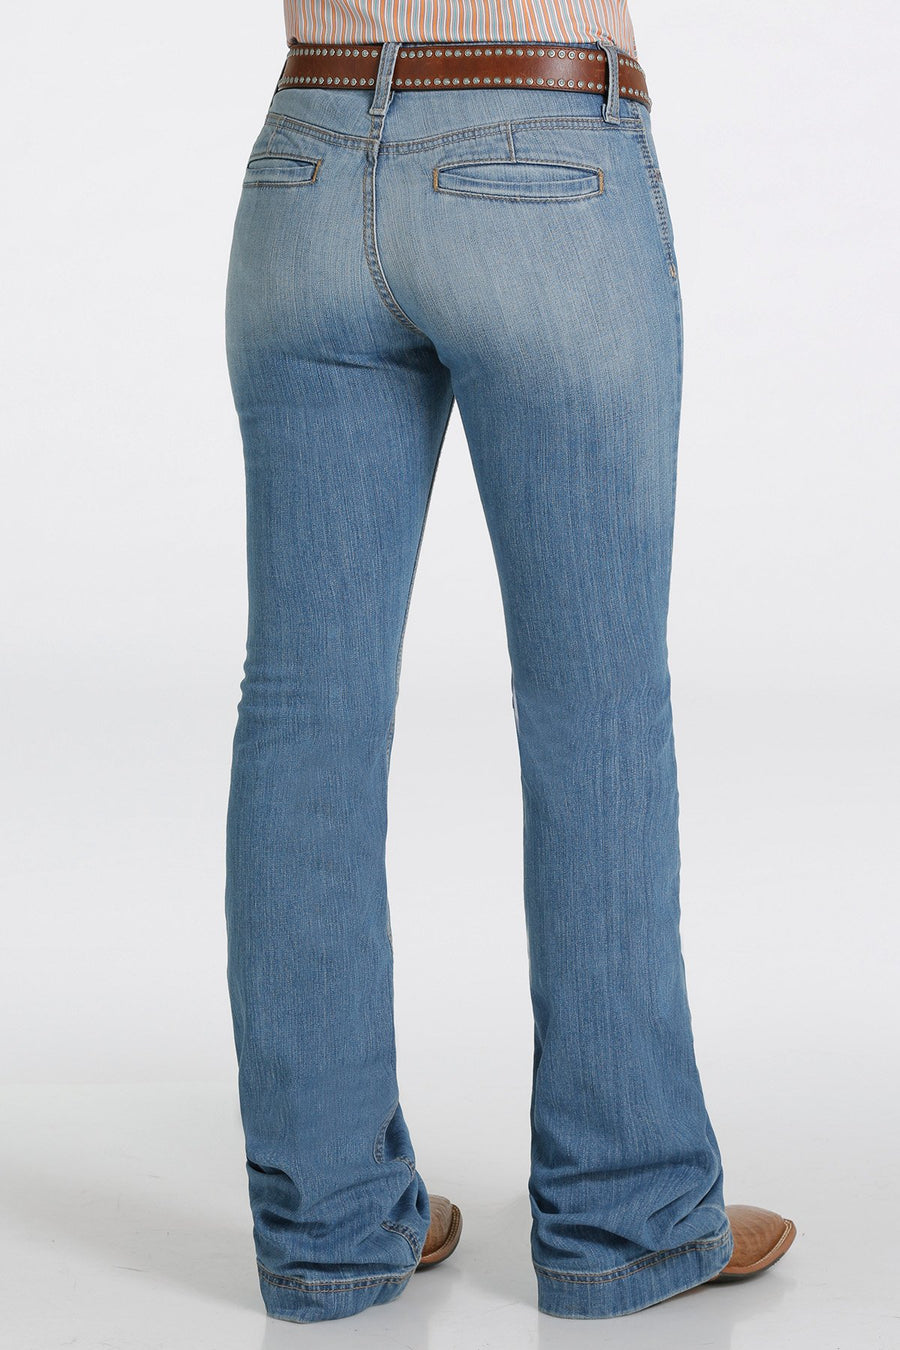 Cinch Women’s Lynden Light Stonewash Slim Fit Boot Cut Jean